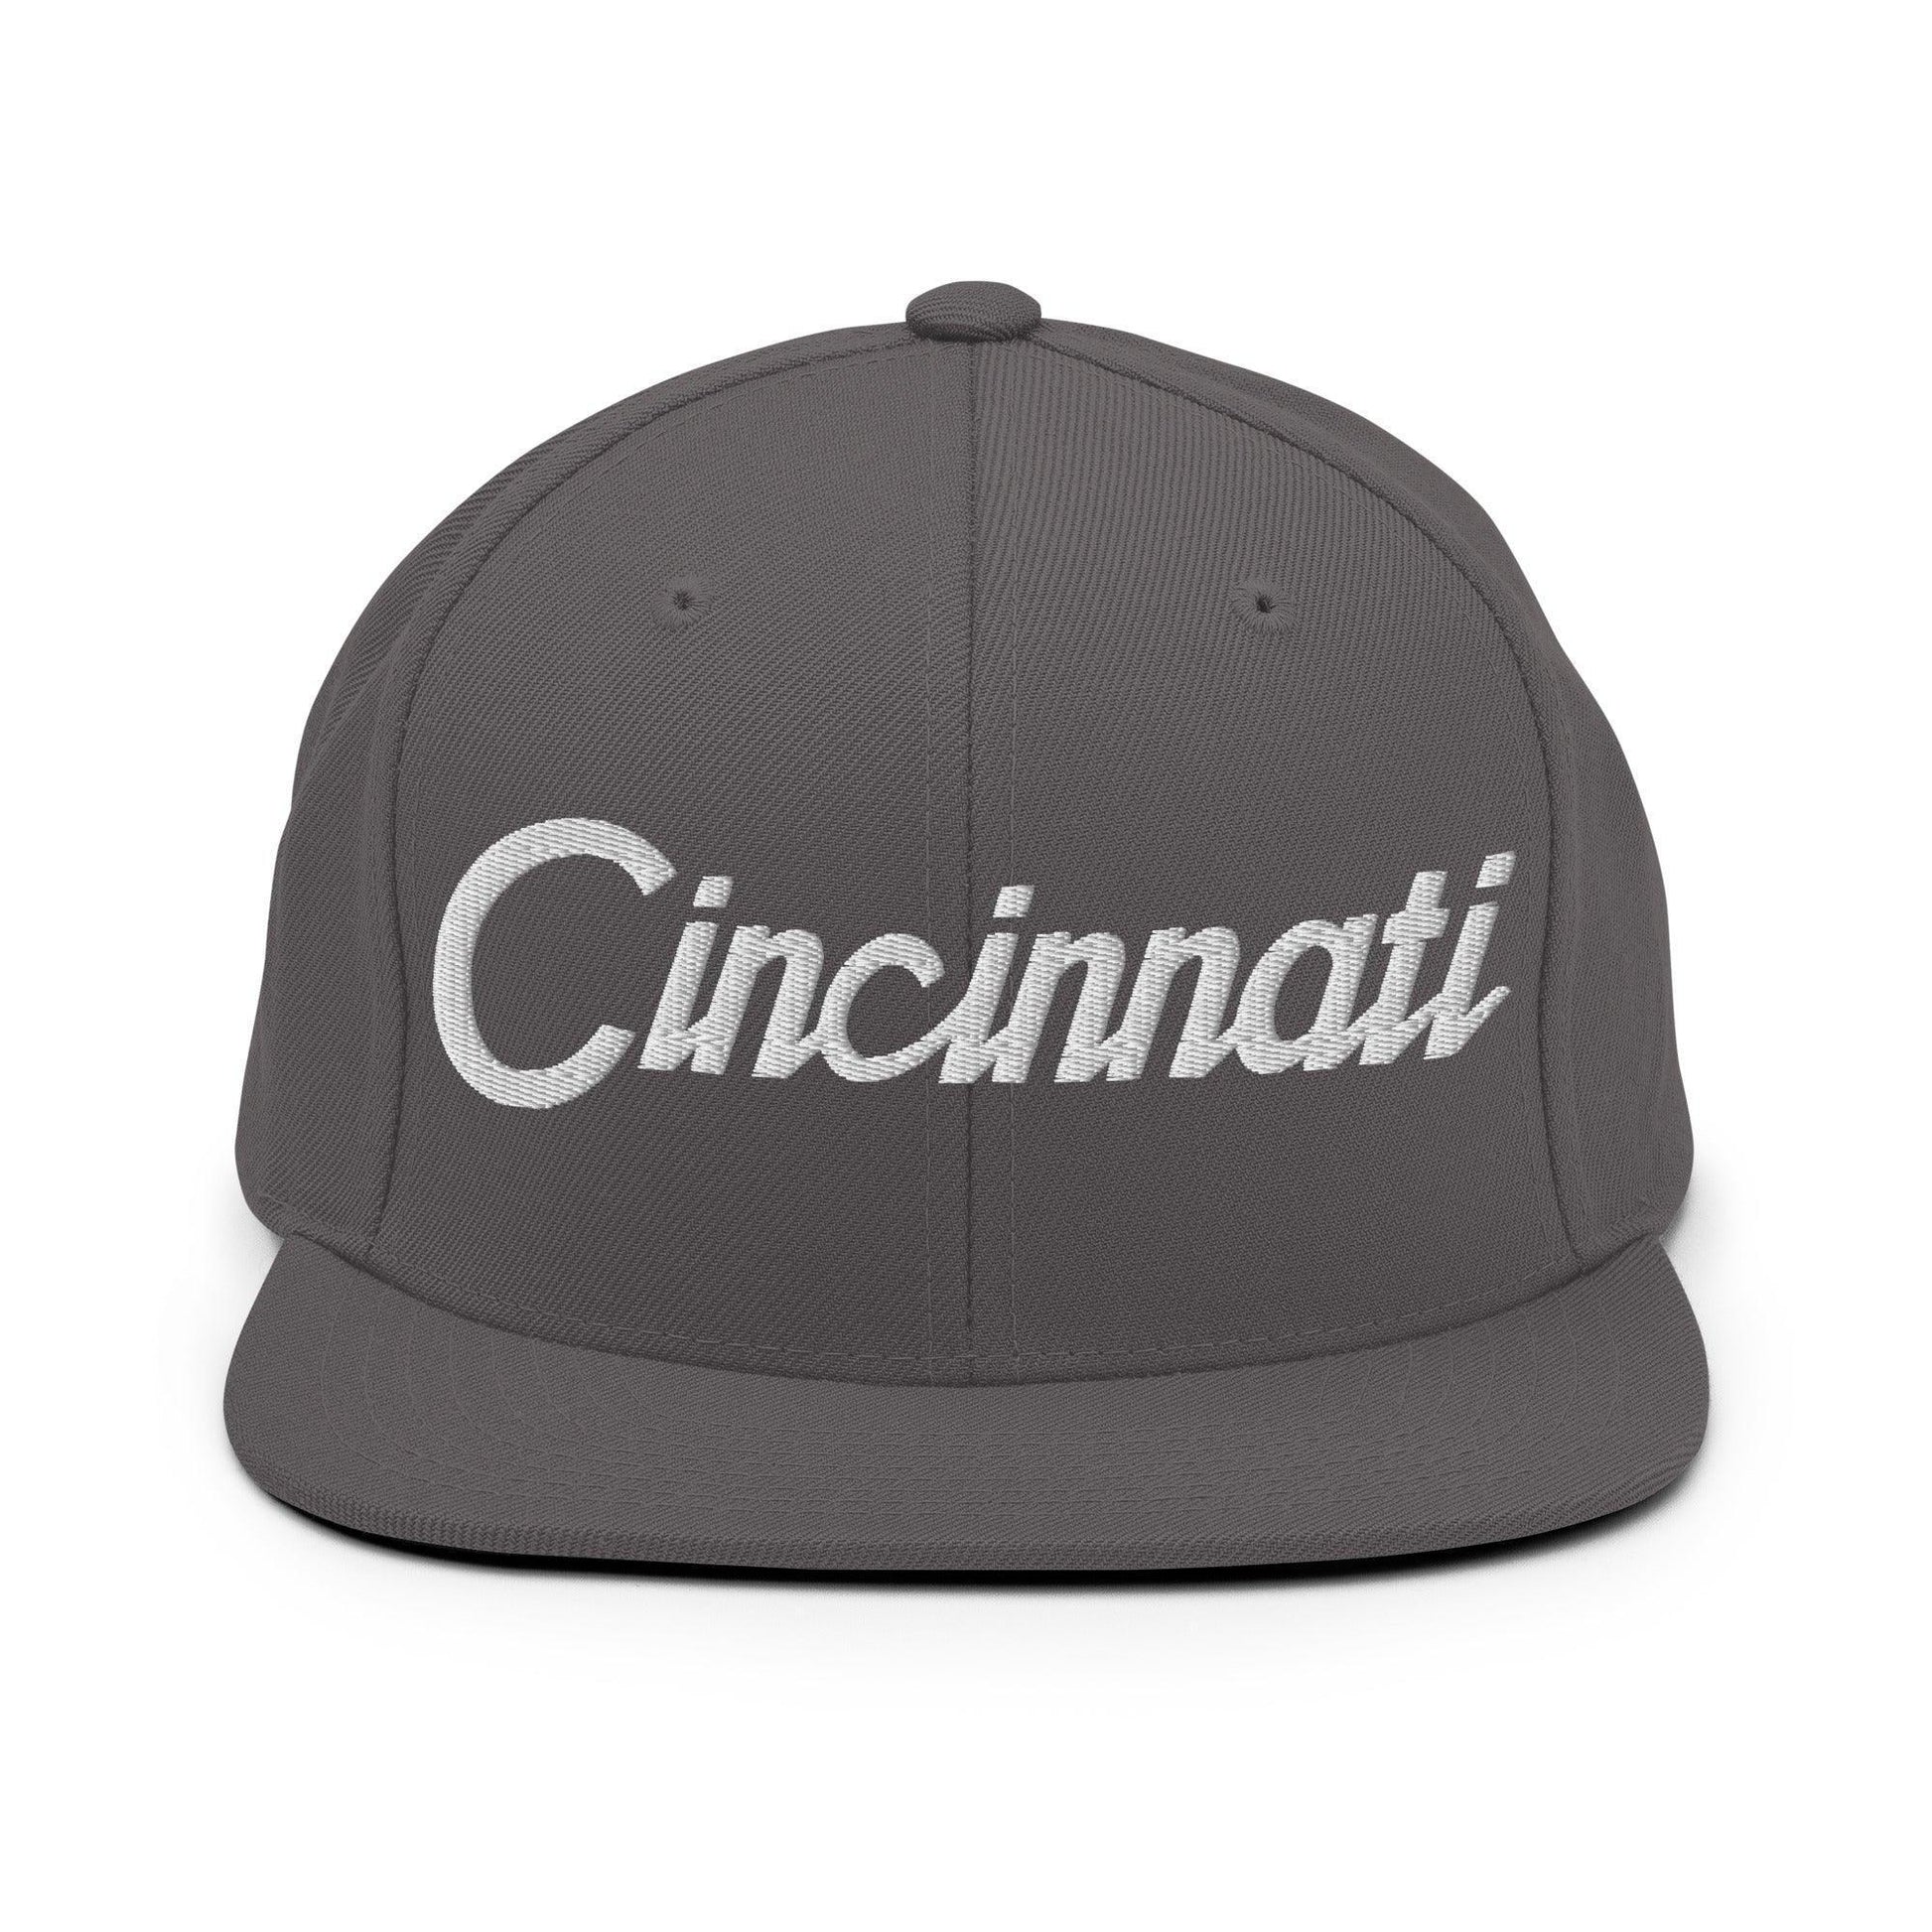 Cincinnati Script Snapback Hat Dark Grey